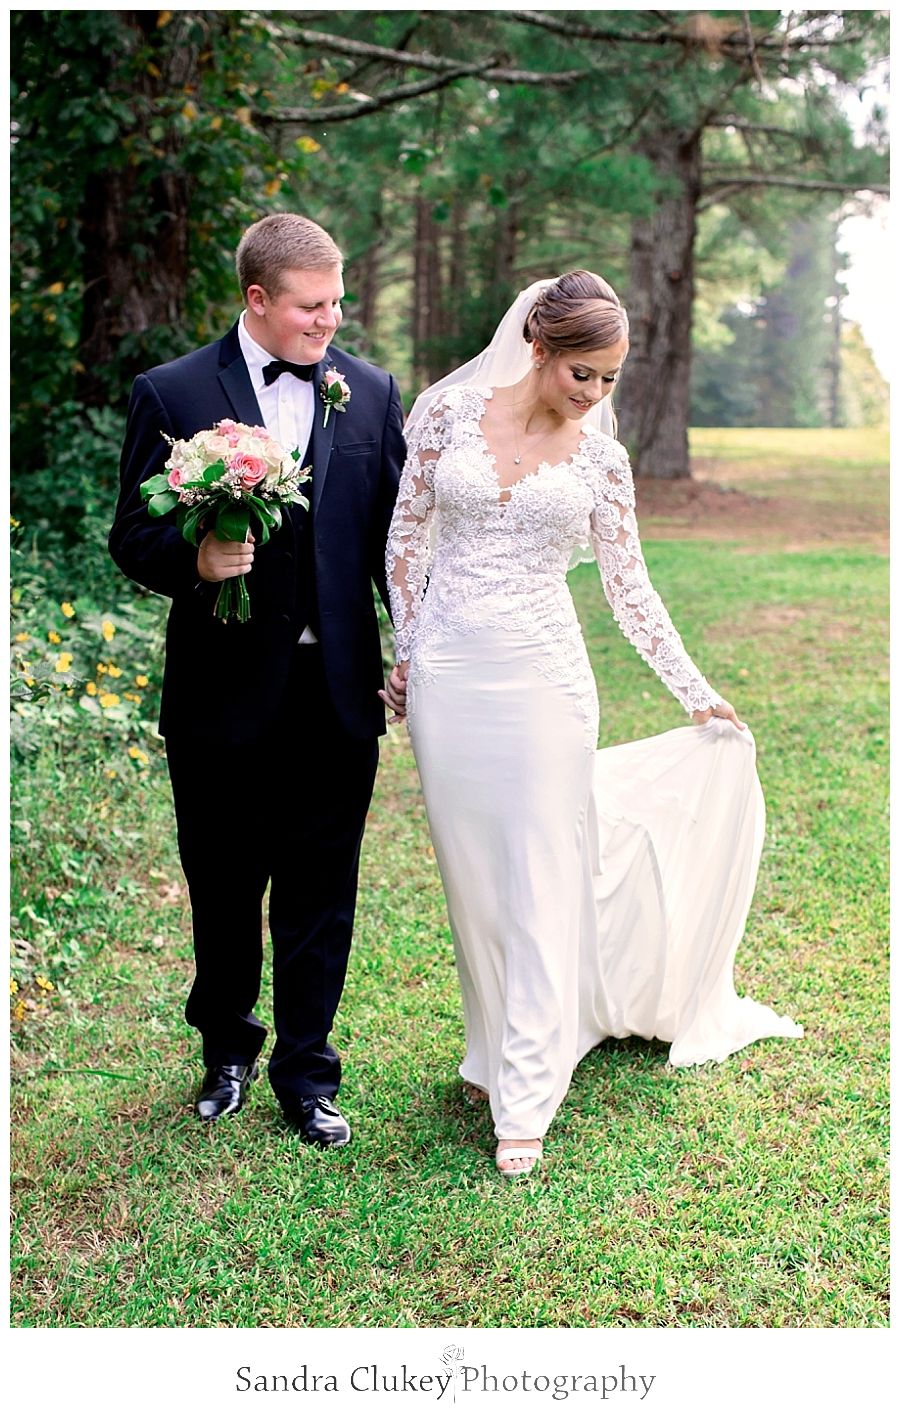  Bride and groom walking in Fletcher Park, Cleveland TN.  Copyright Sandra Clukey Photography, LLC  https://www.sandraclukeyphotography.com/ 